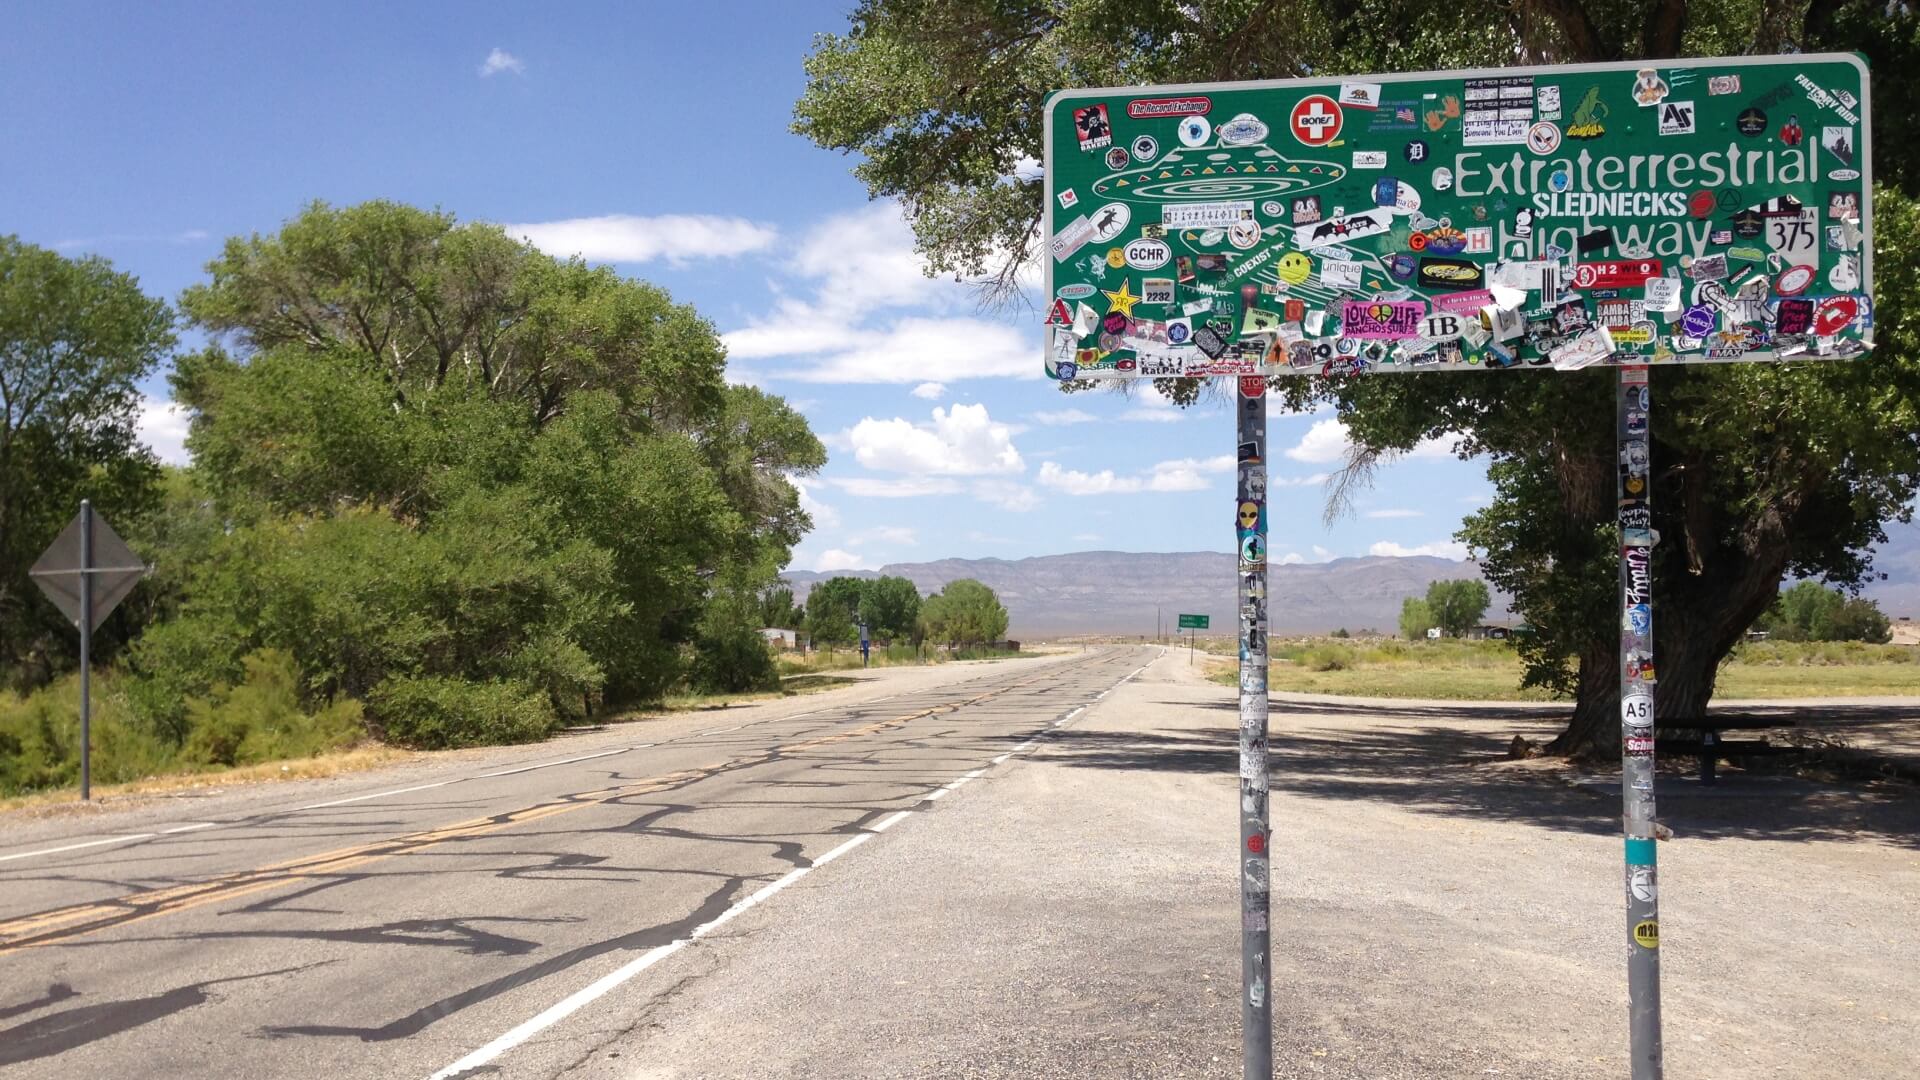 Extraterrestrial Highway Sign, Crystal Springs NV 